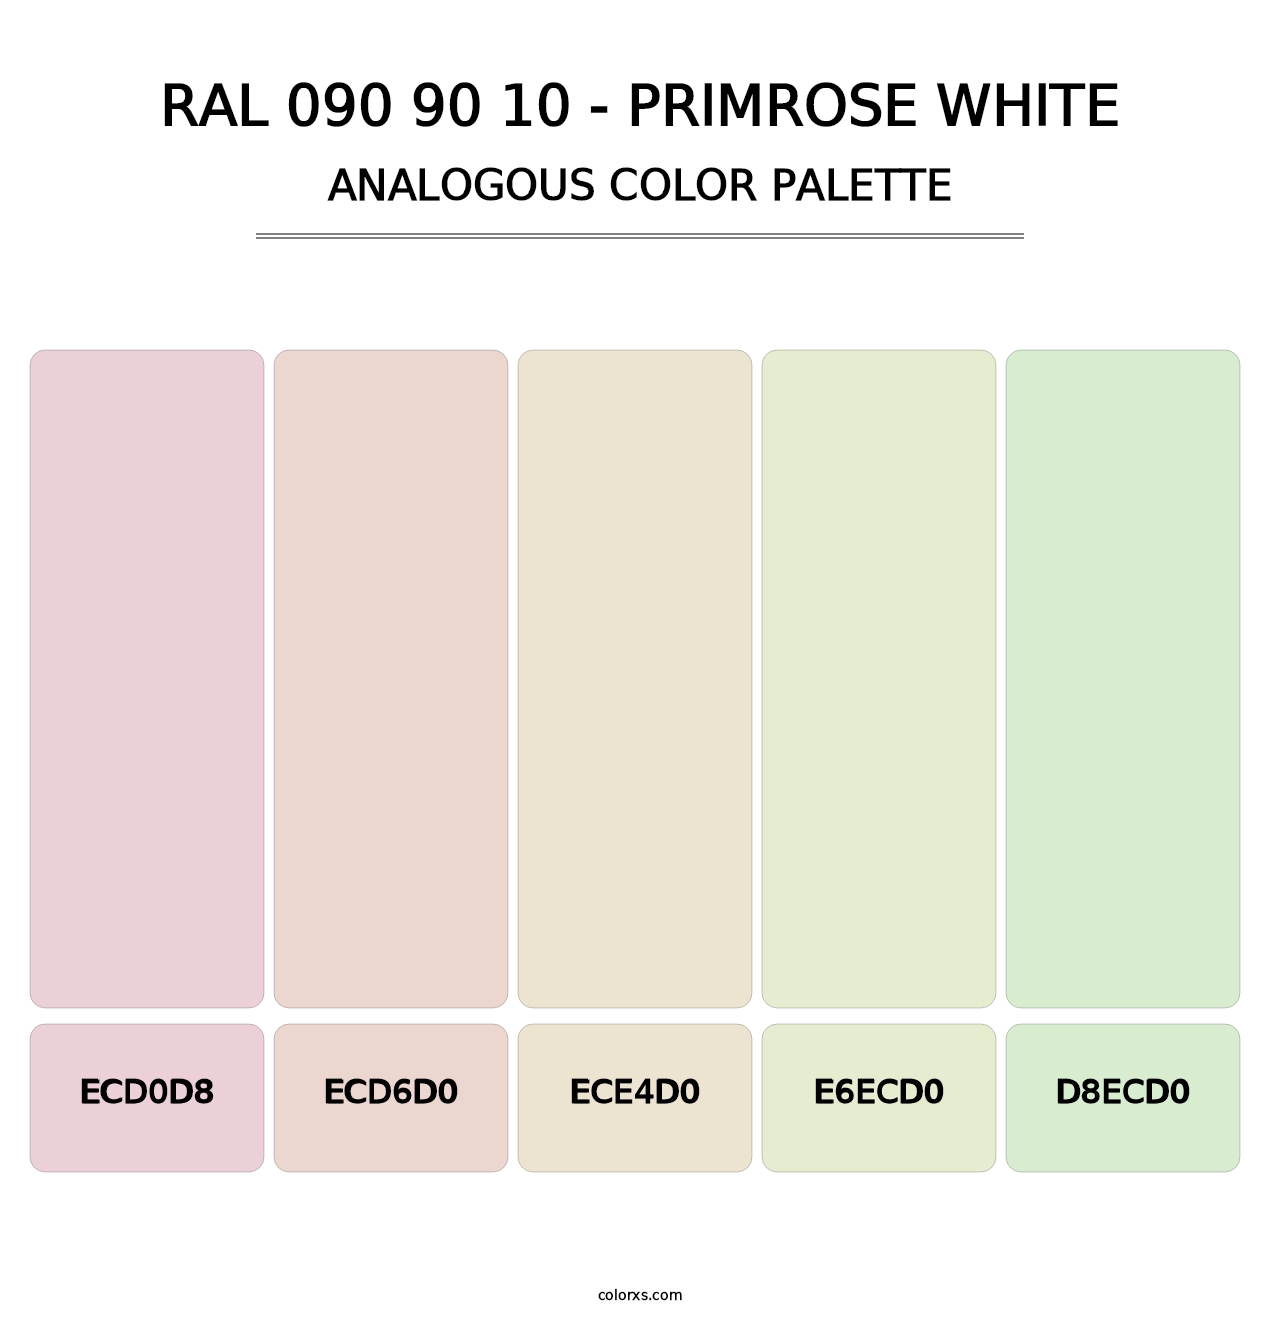 RAL 090 90 10 - Primrose White - Analogous Color Palette